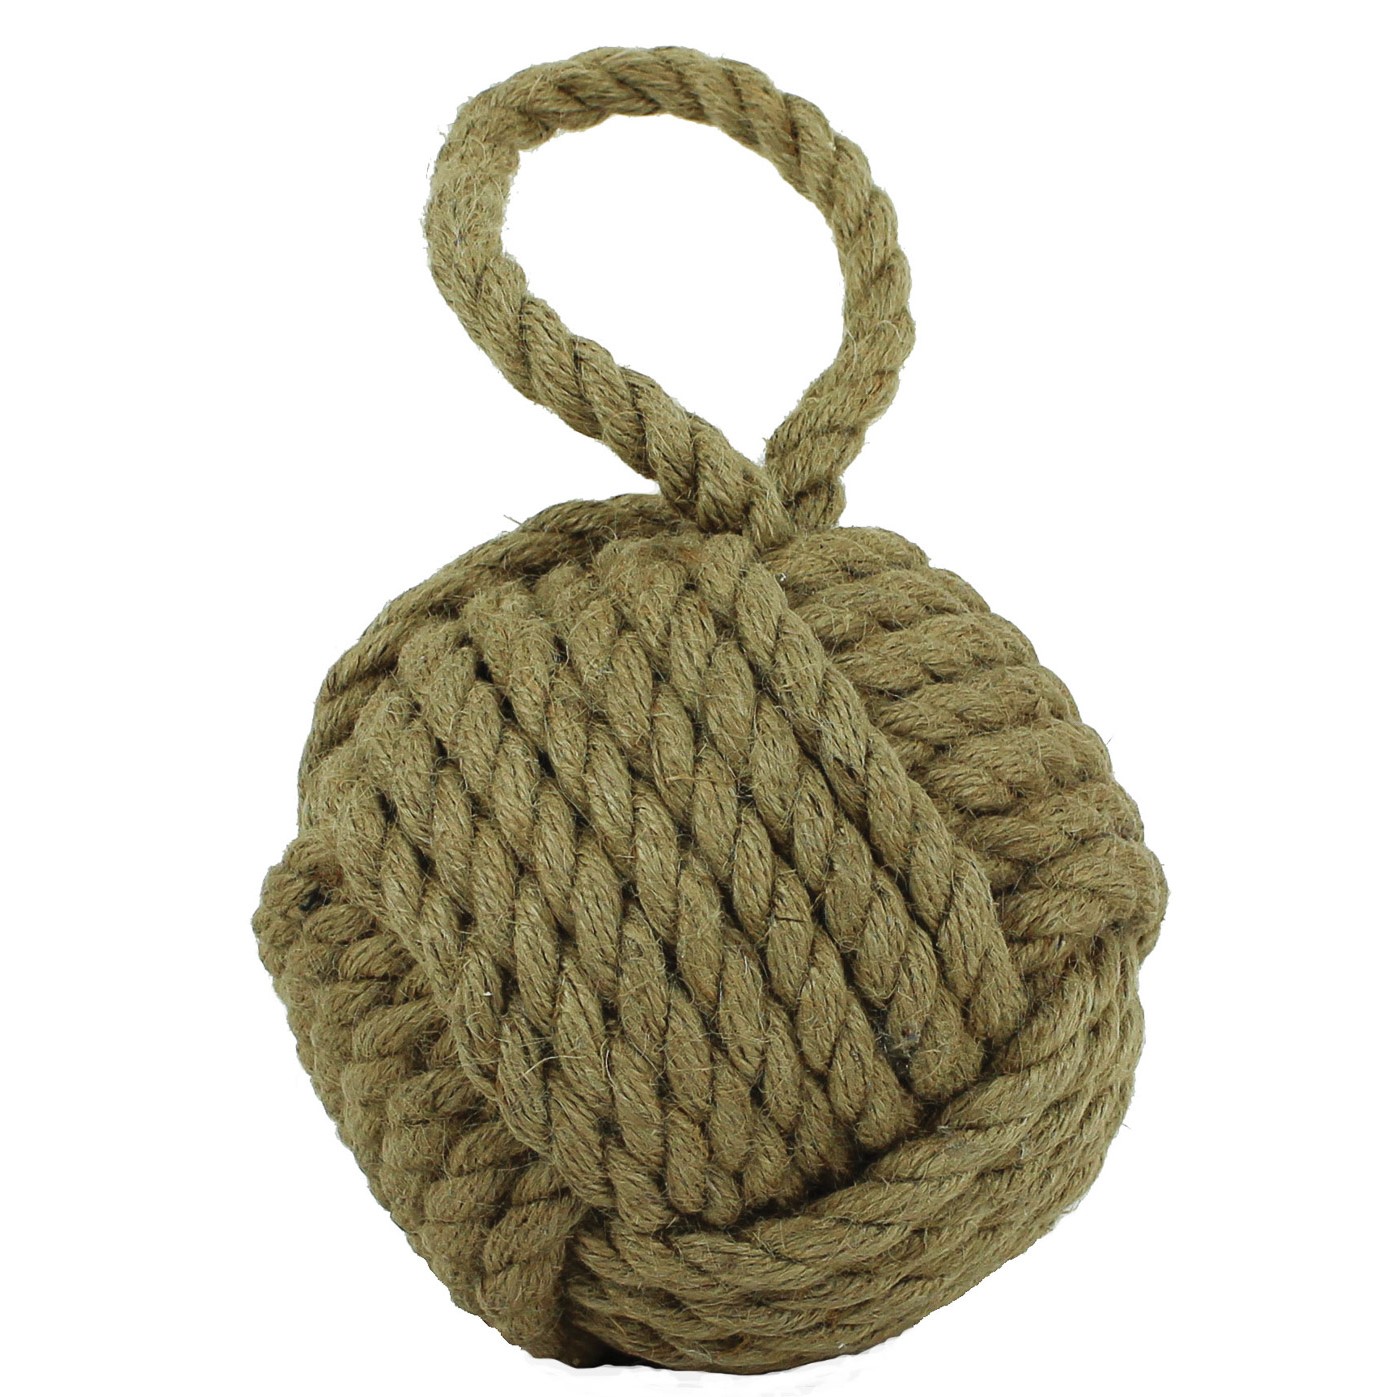 https://www.saltyhome.com/wp-content/uploads/2022/06/Sailors-knot-monkey-fist-nautical-rope-door-stop-MS-269.jpg